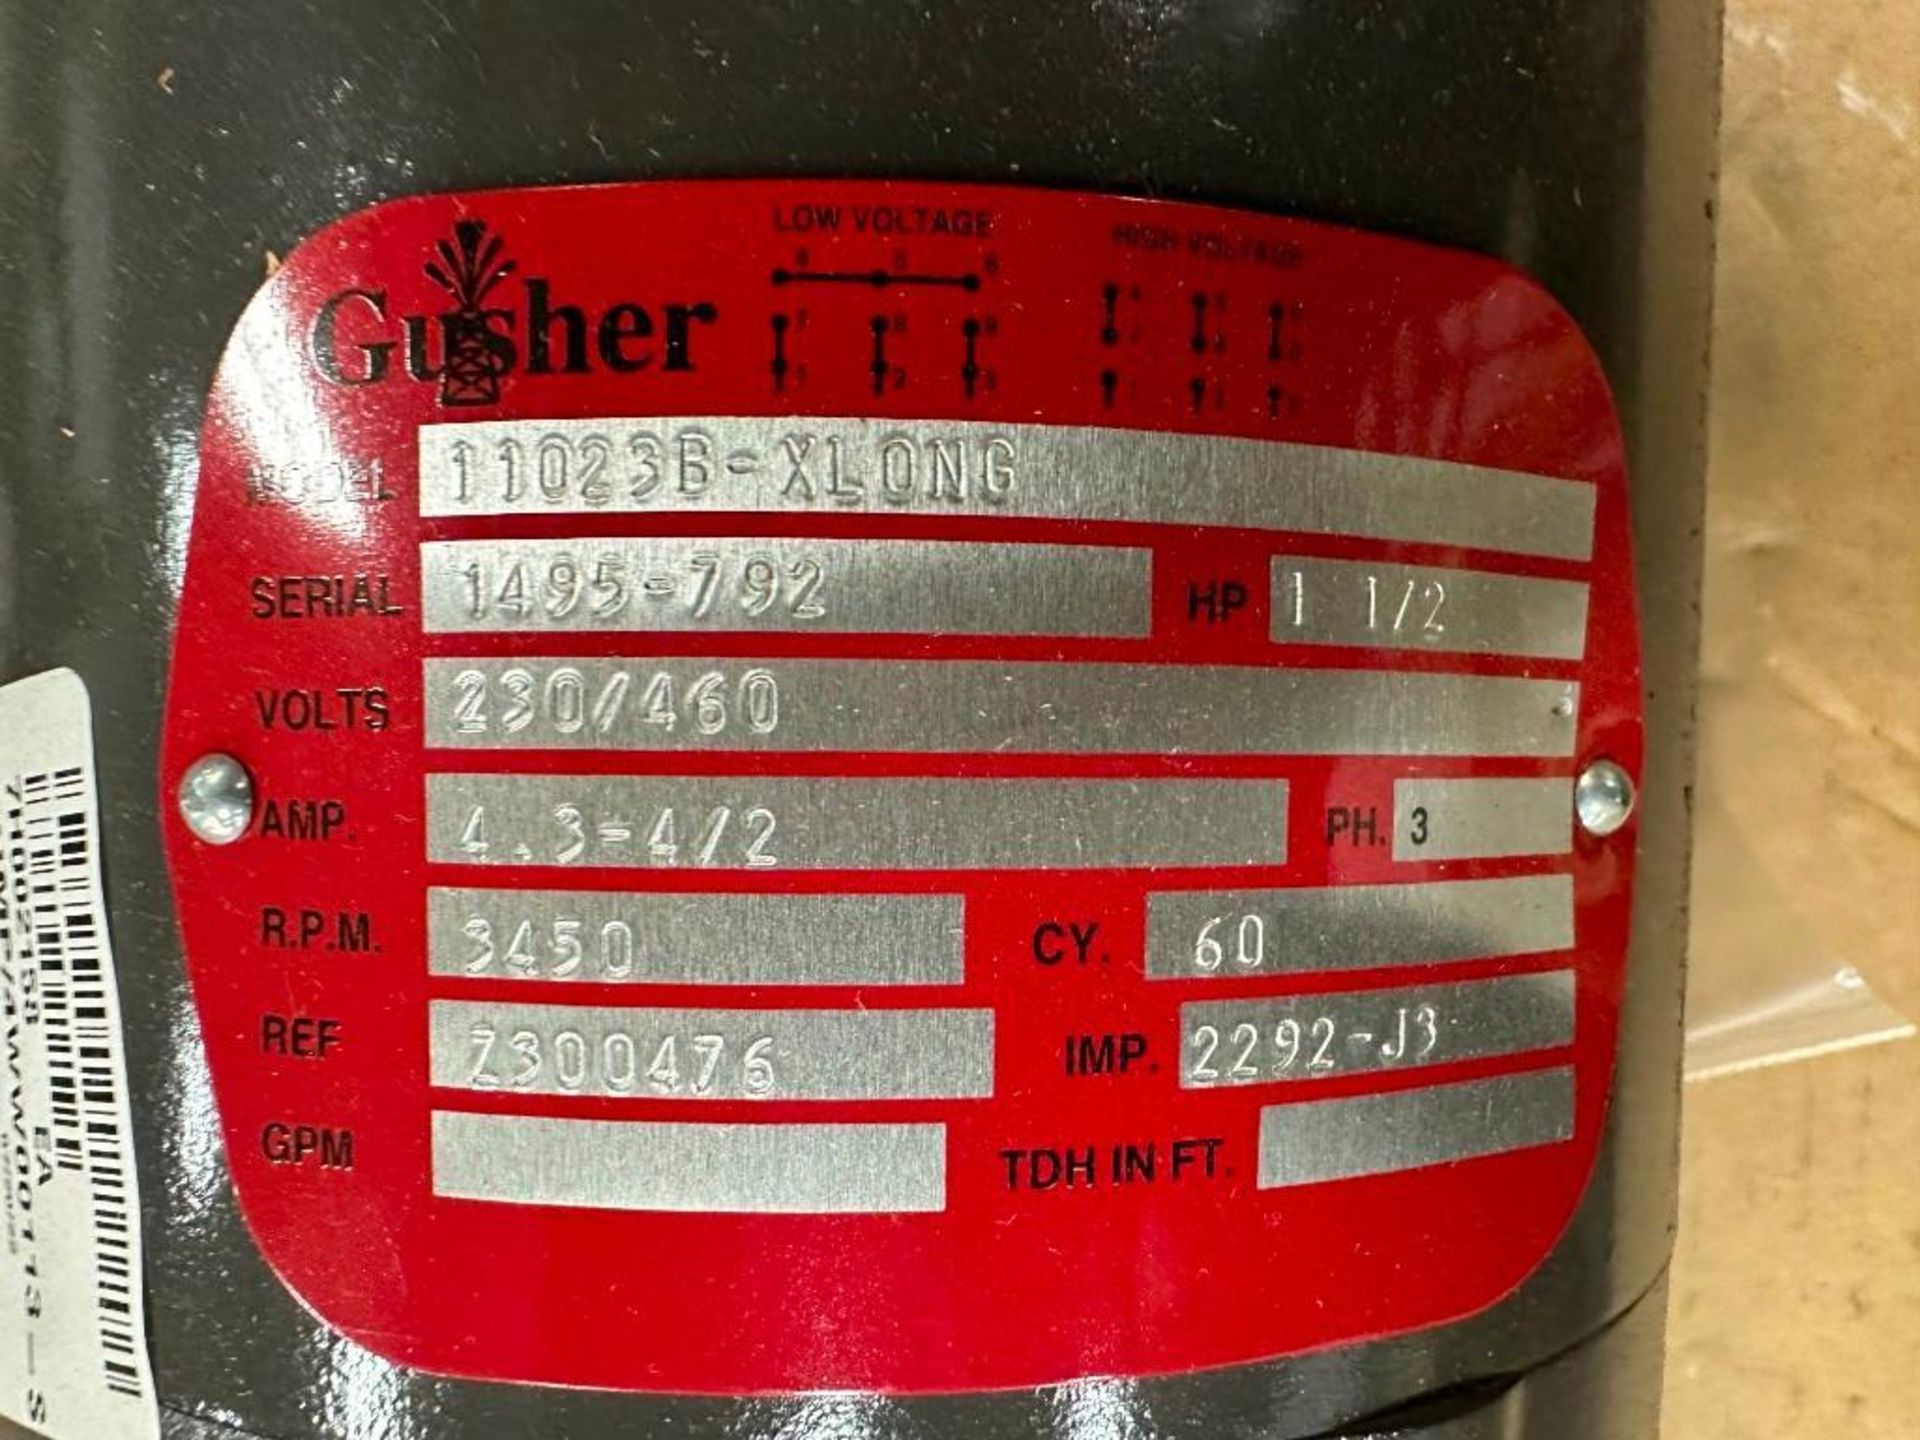 Gusher #11023B-XLONG Pump - Image 6 of 6